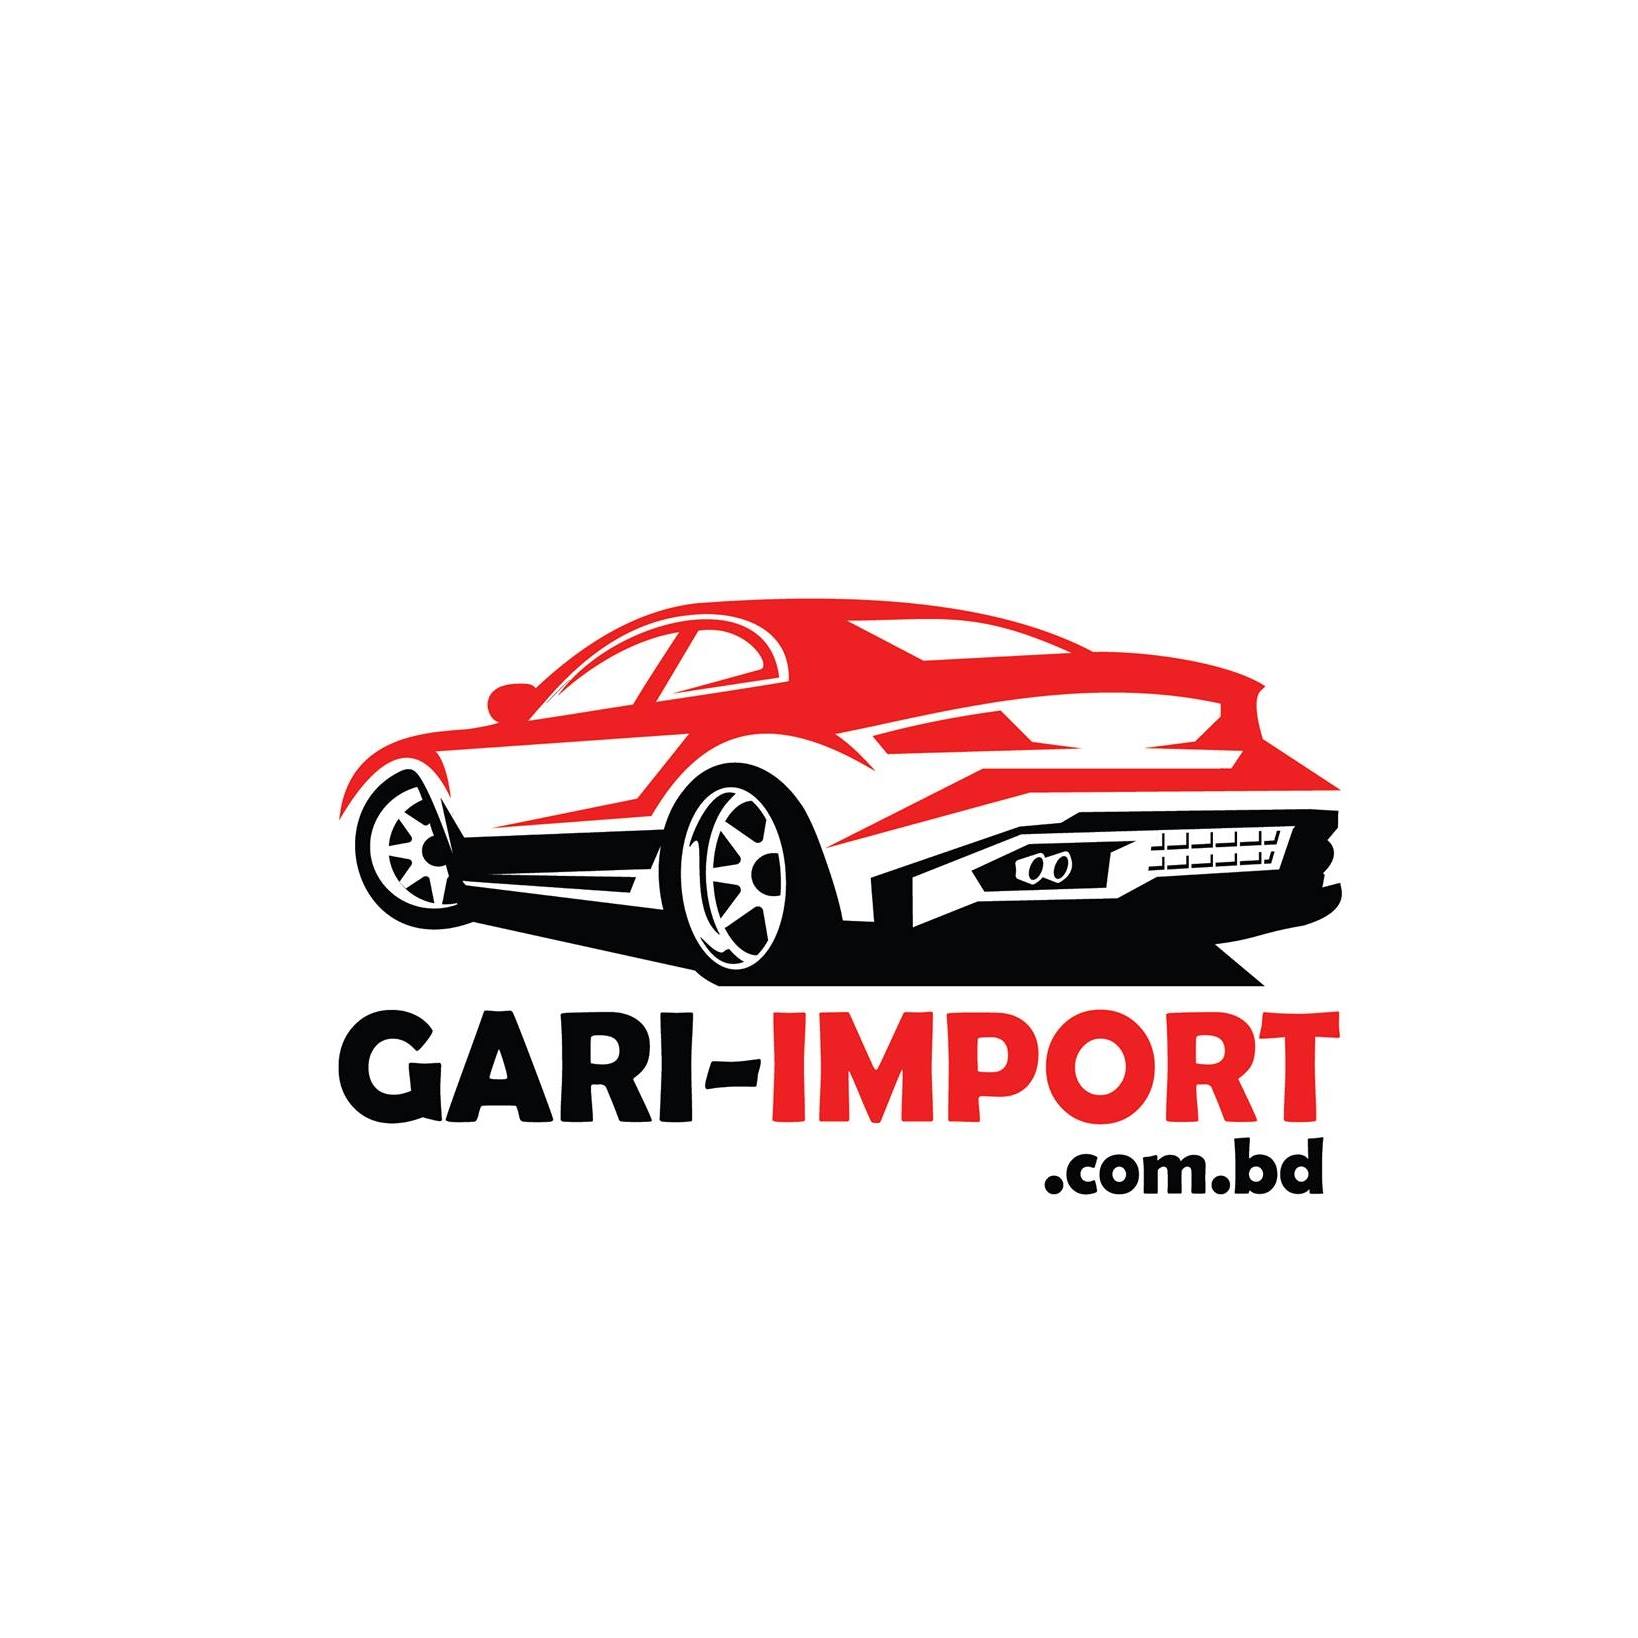 GariImport: Trusted Car Rental Company in Bangladesh